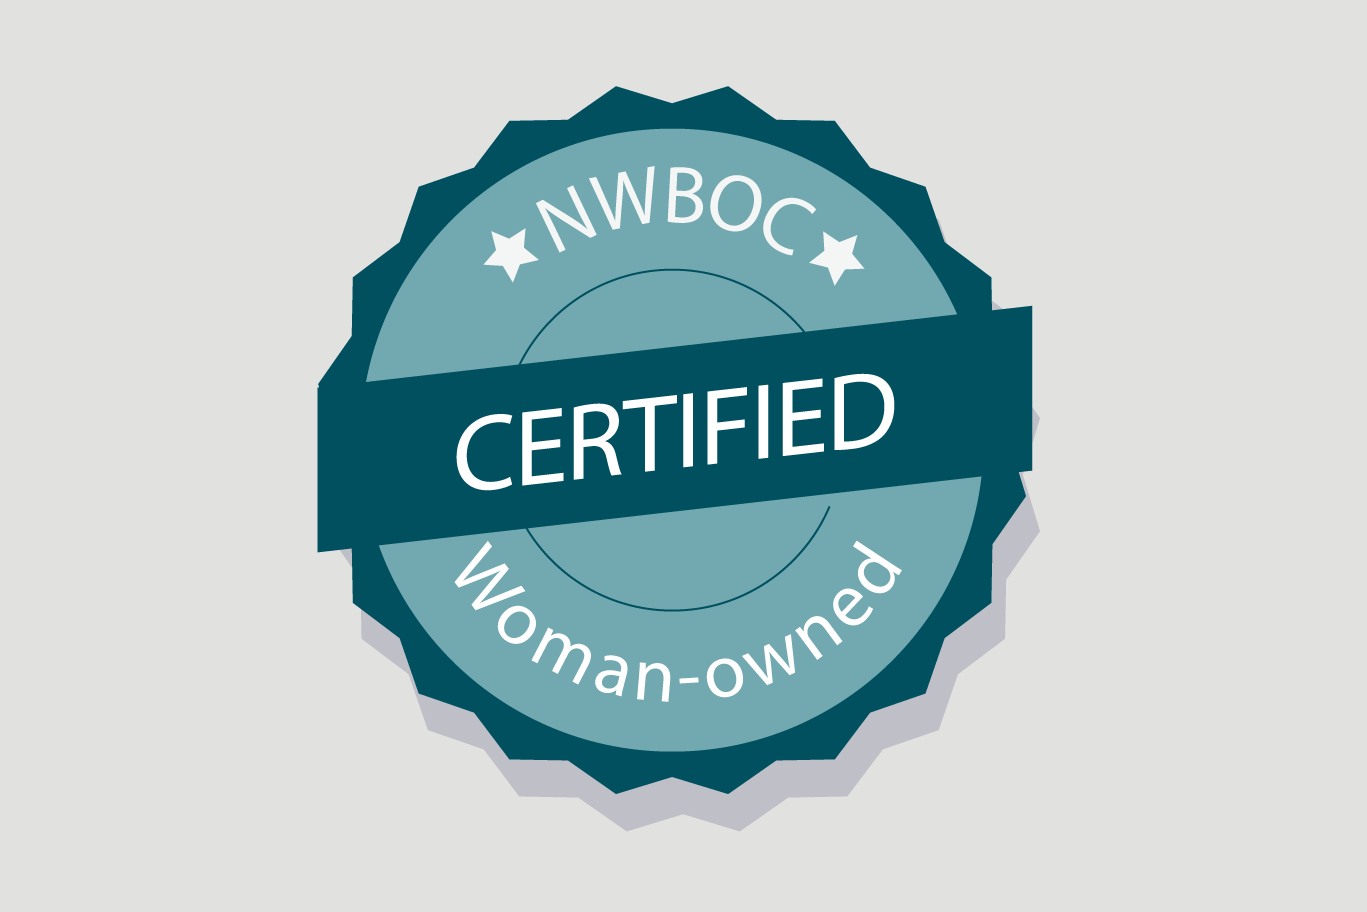 NWBOC National Certification